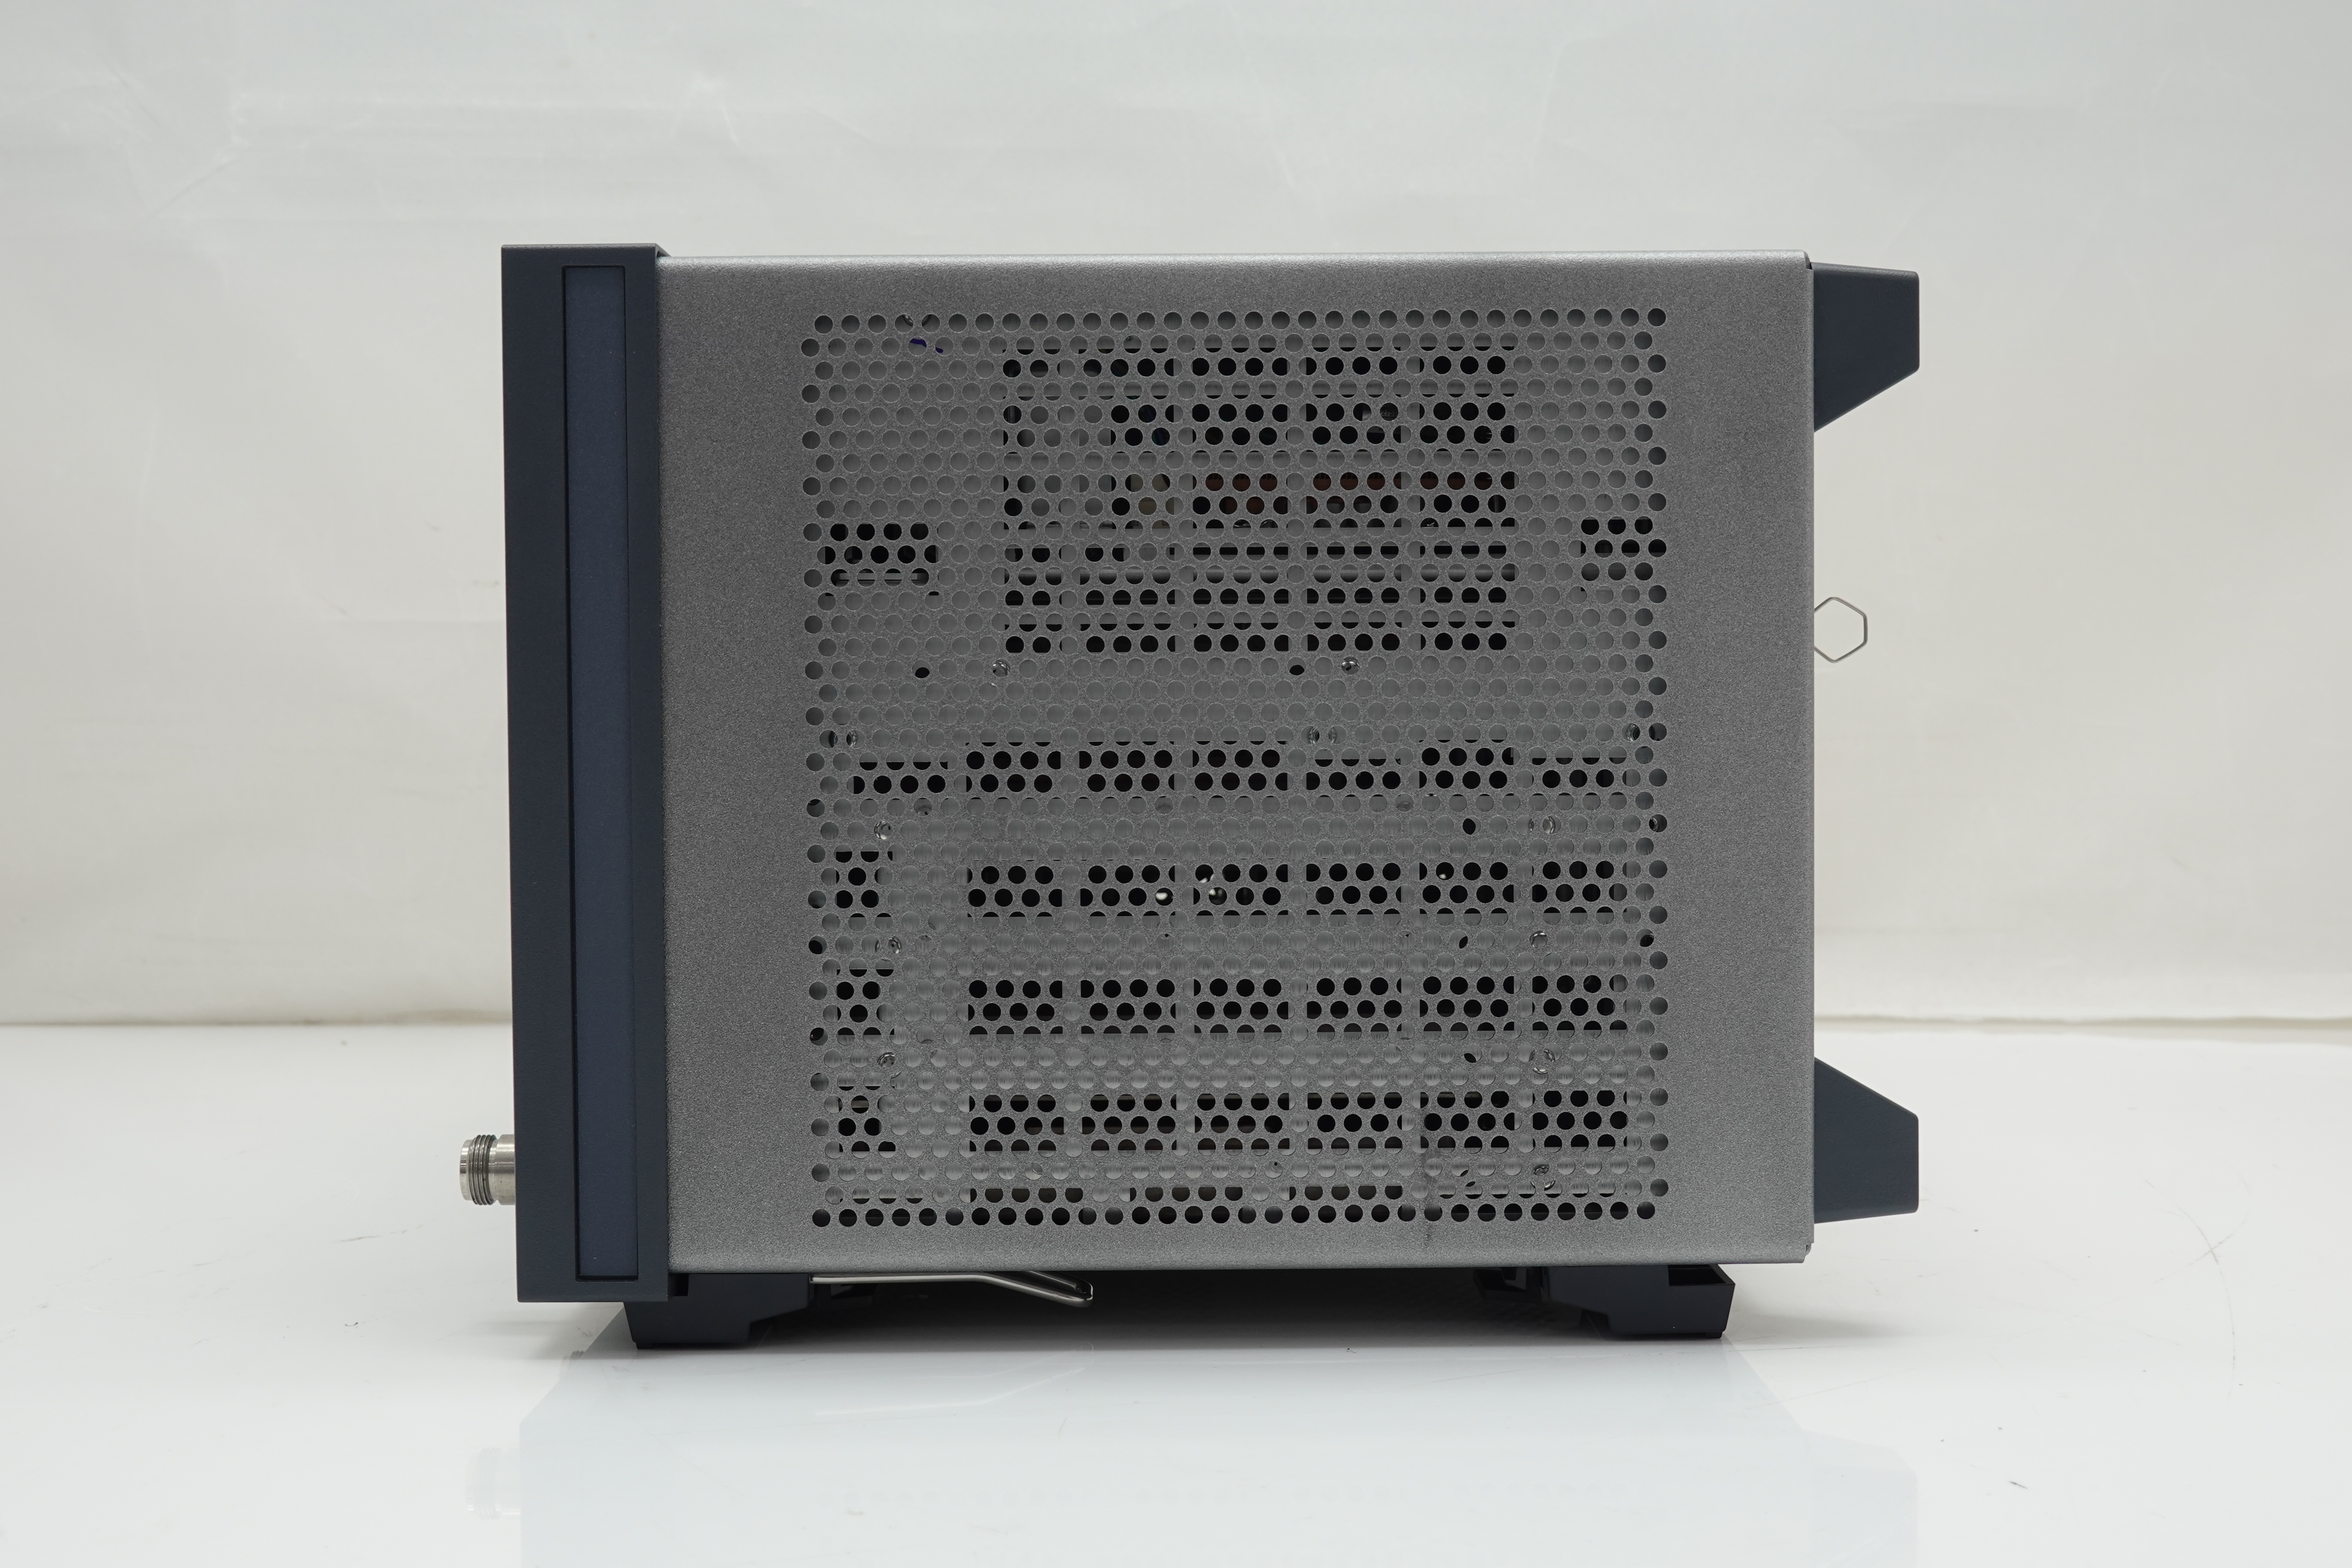 Keysight E5061B-237 S-parameter Test Set / 100 kHz to 3 GHz / 75 Ohm System Impedance